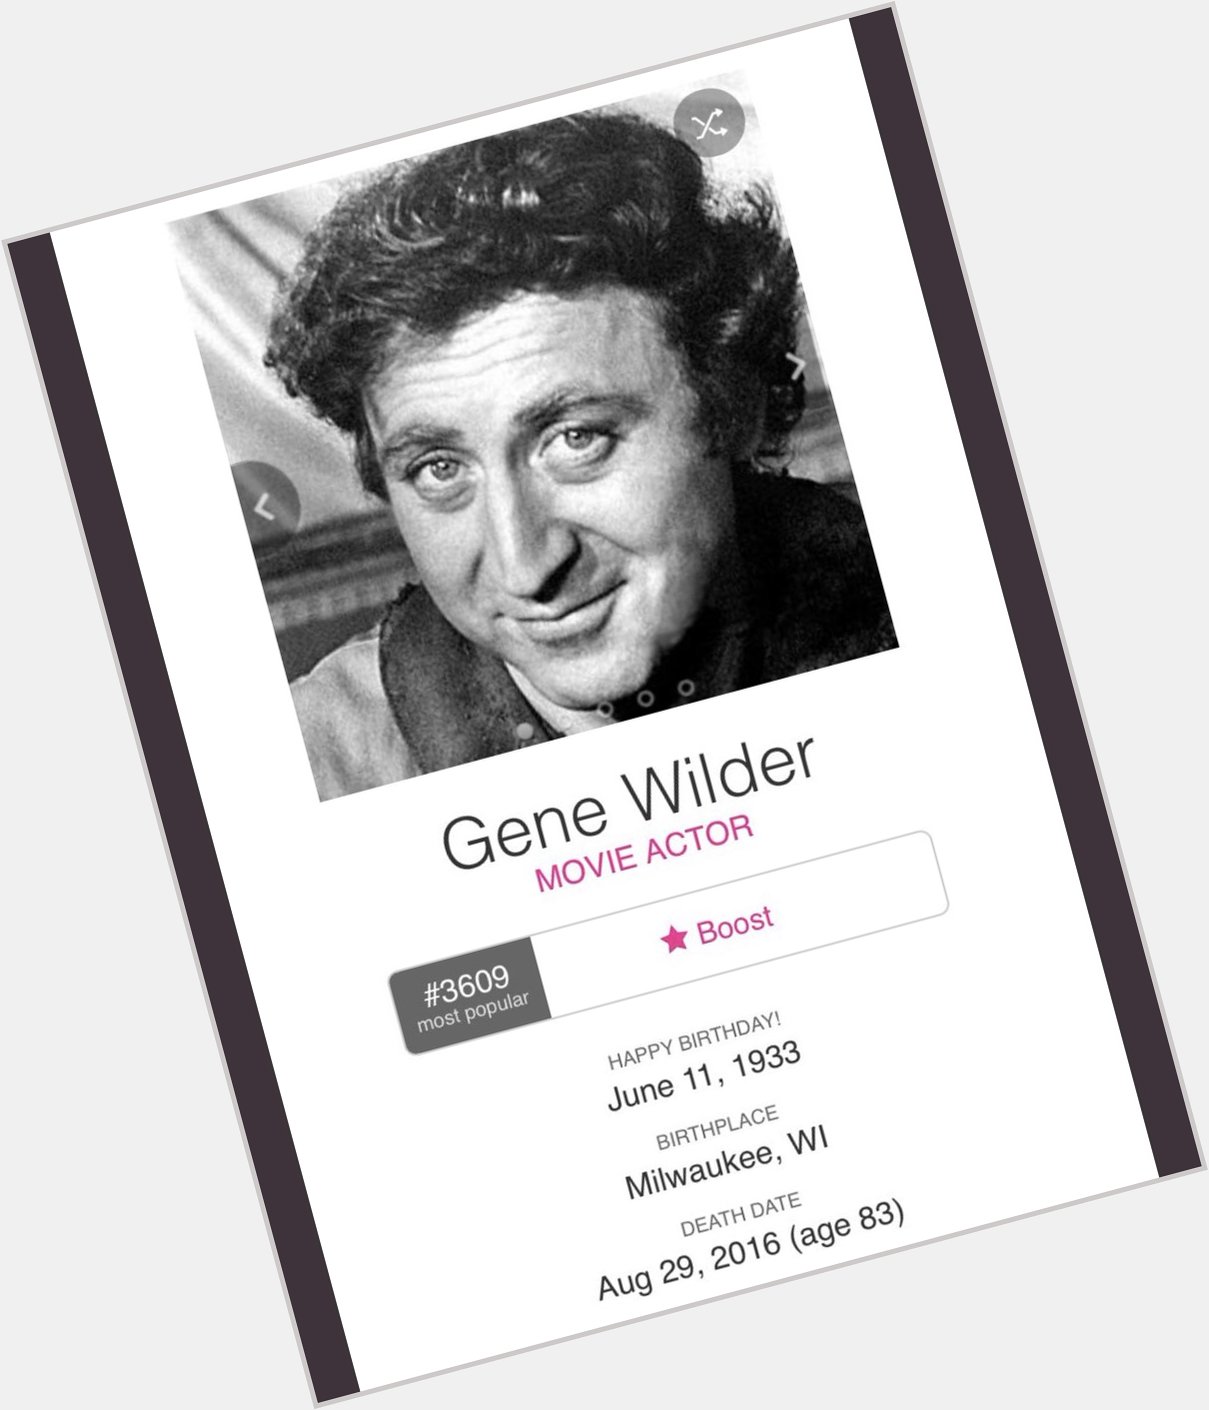 Happy birthday Gene Wilder!!! 